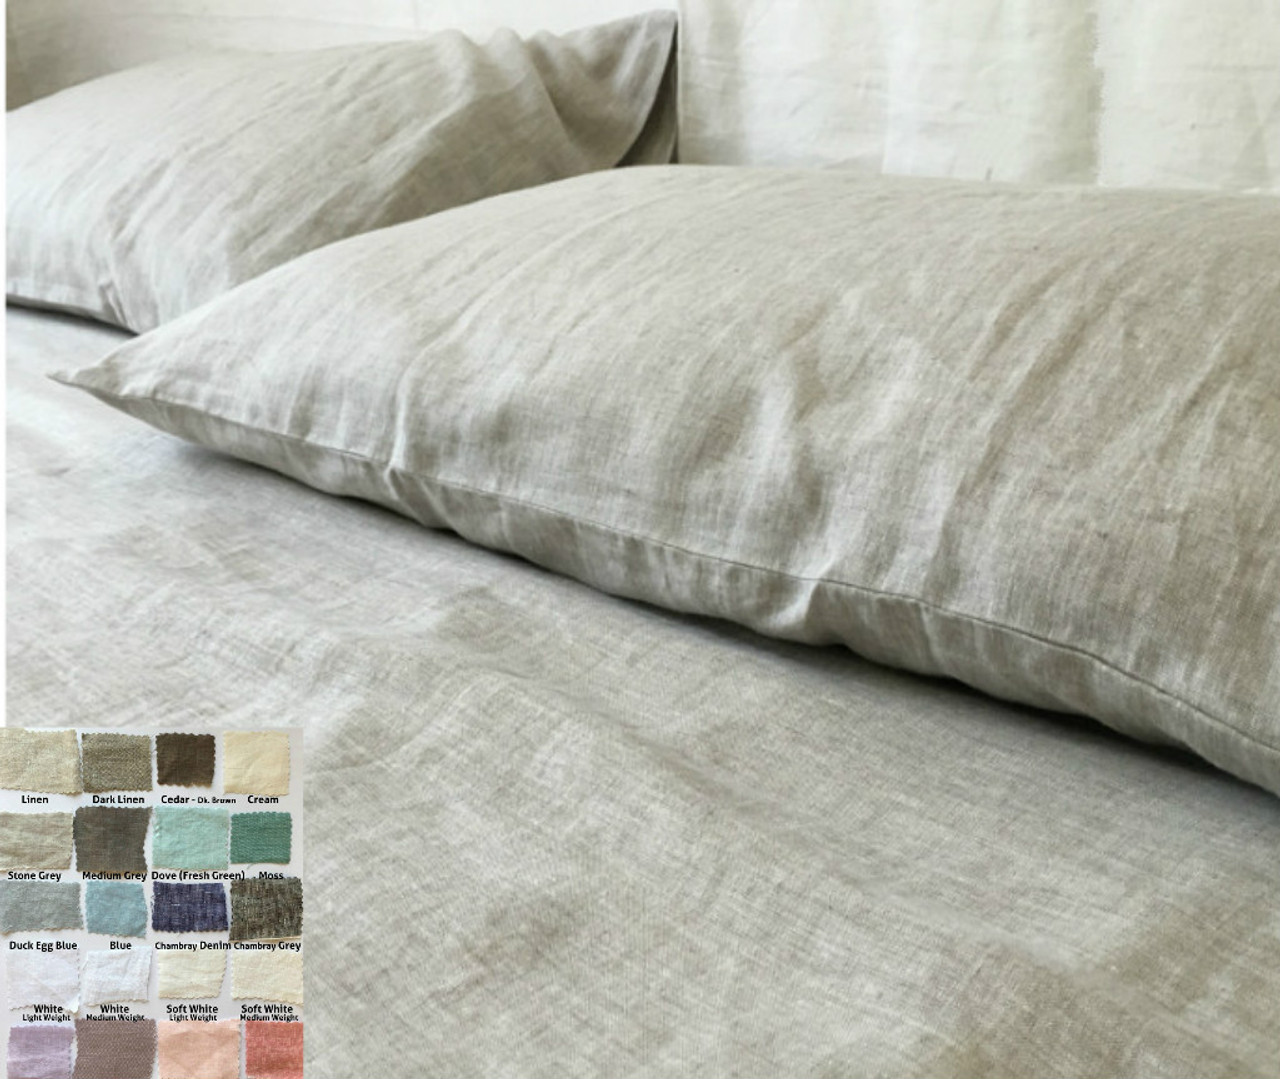 CHARCOAL GREY Linen Set of Comforter Cover and Pillows Linen Bedding  Natural Linen Doona Cover Linen Bed Set 